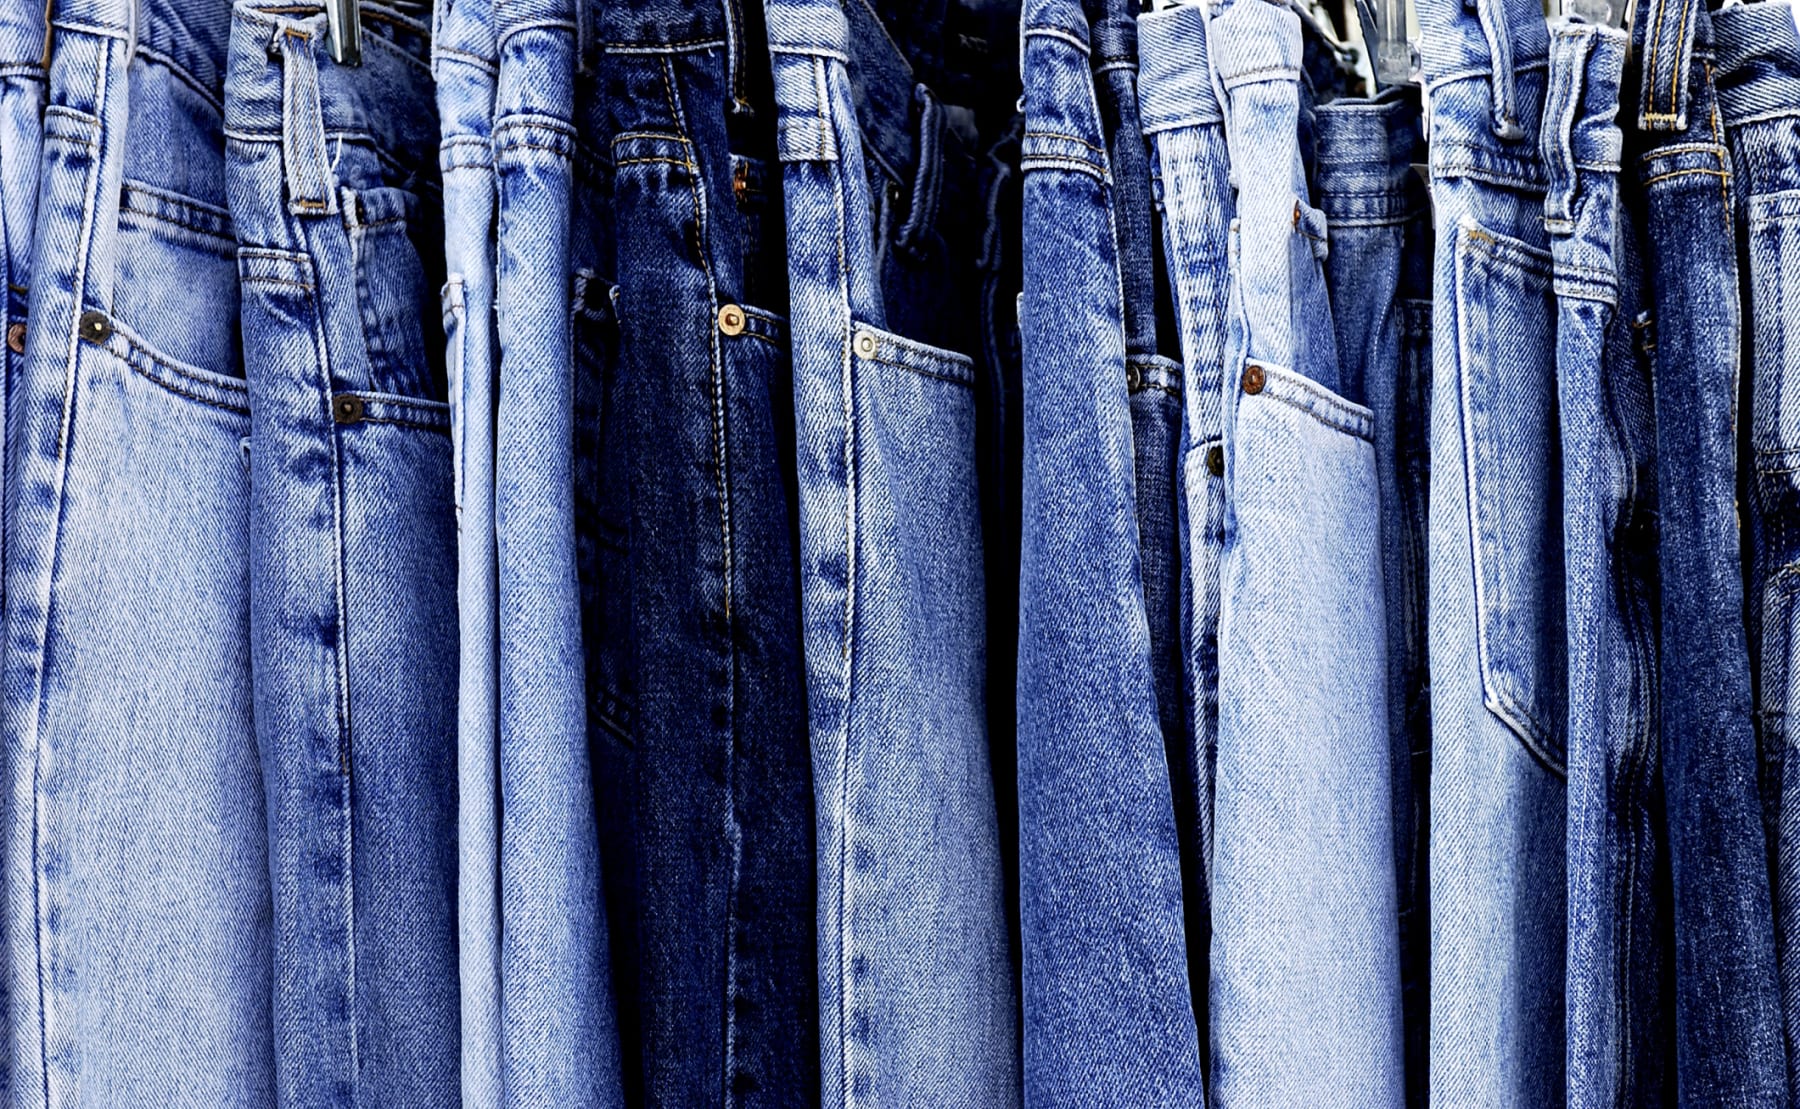 Blue denim jeans hang in row.